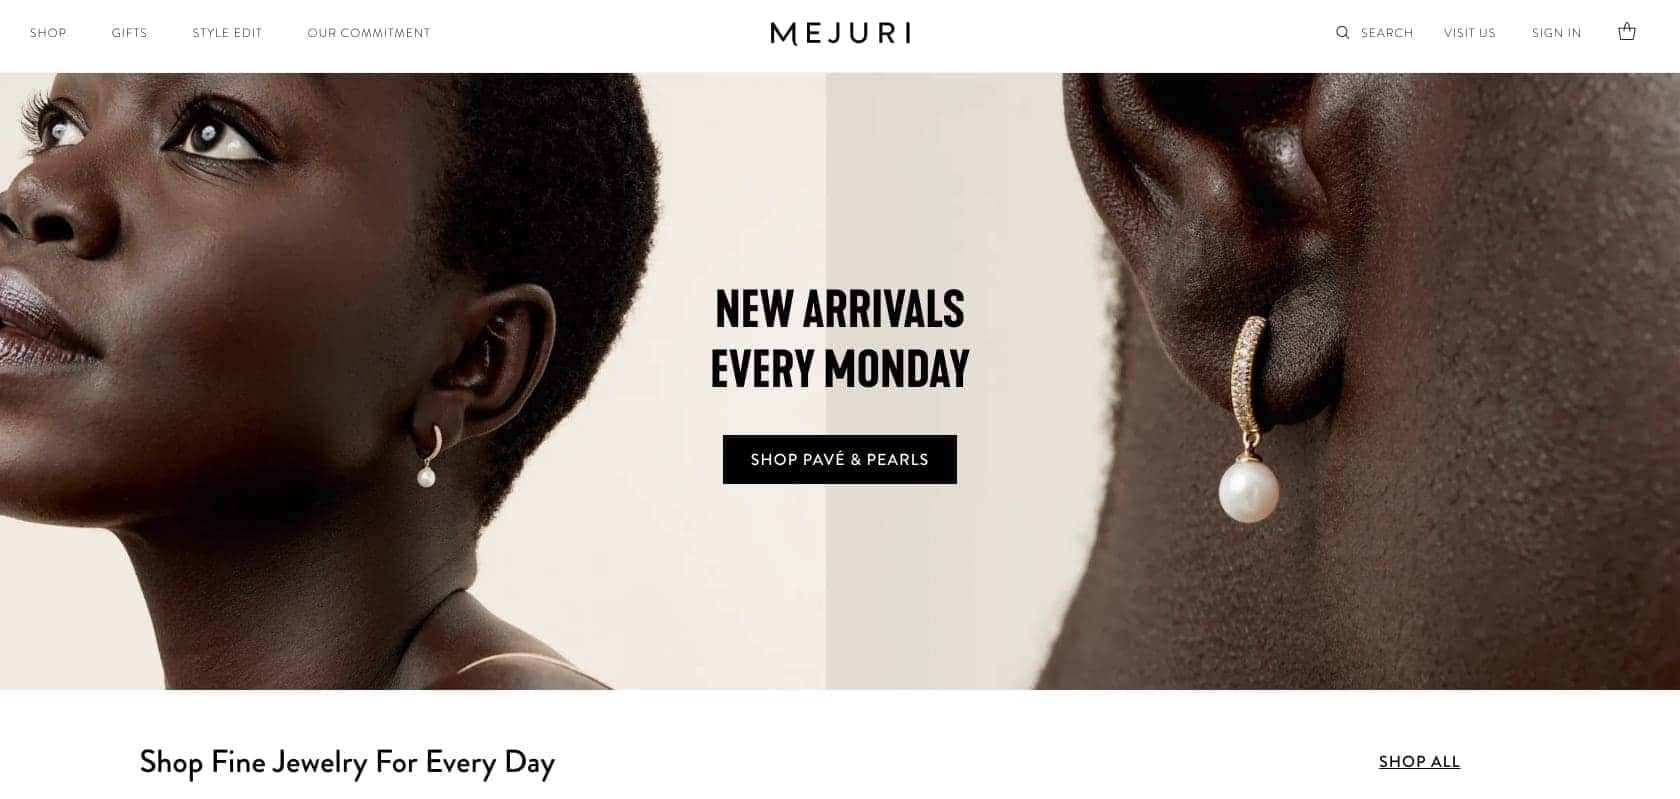 The homepage of Mejuri.com